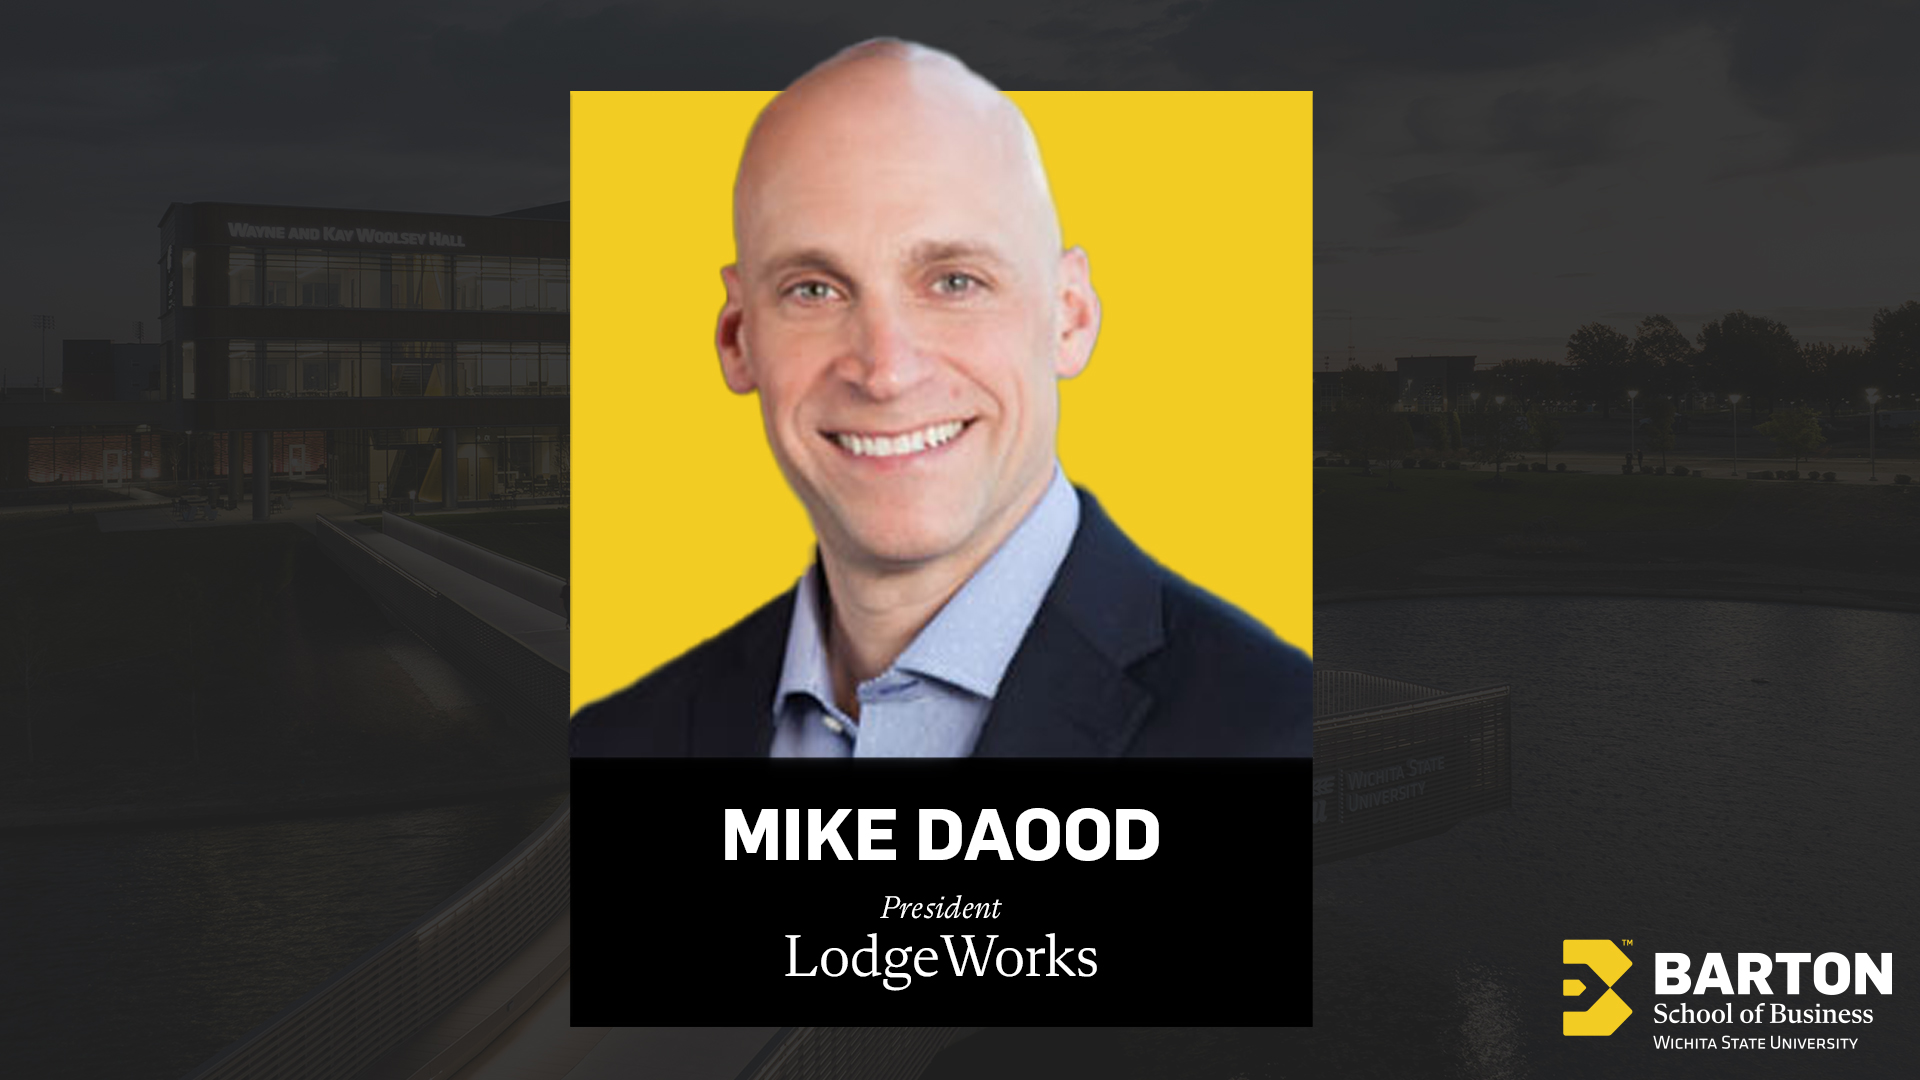 Mike Daood, president of LodgeWorks